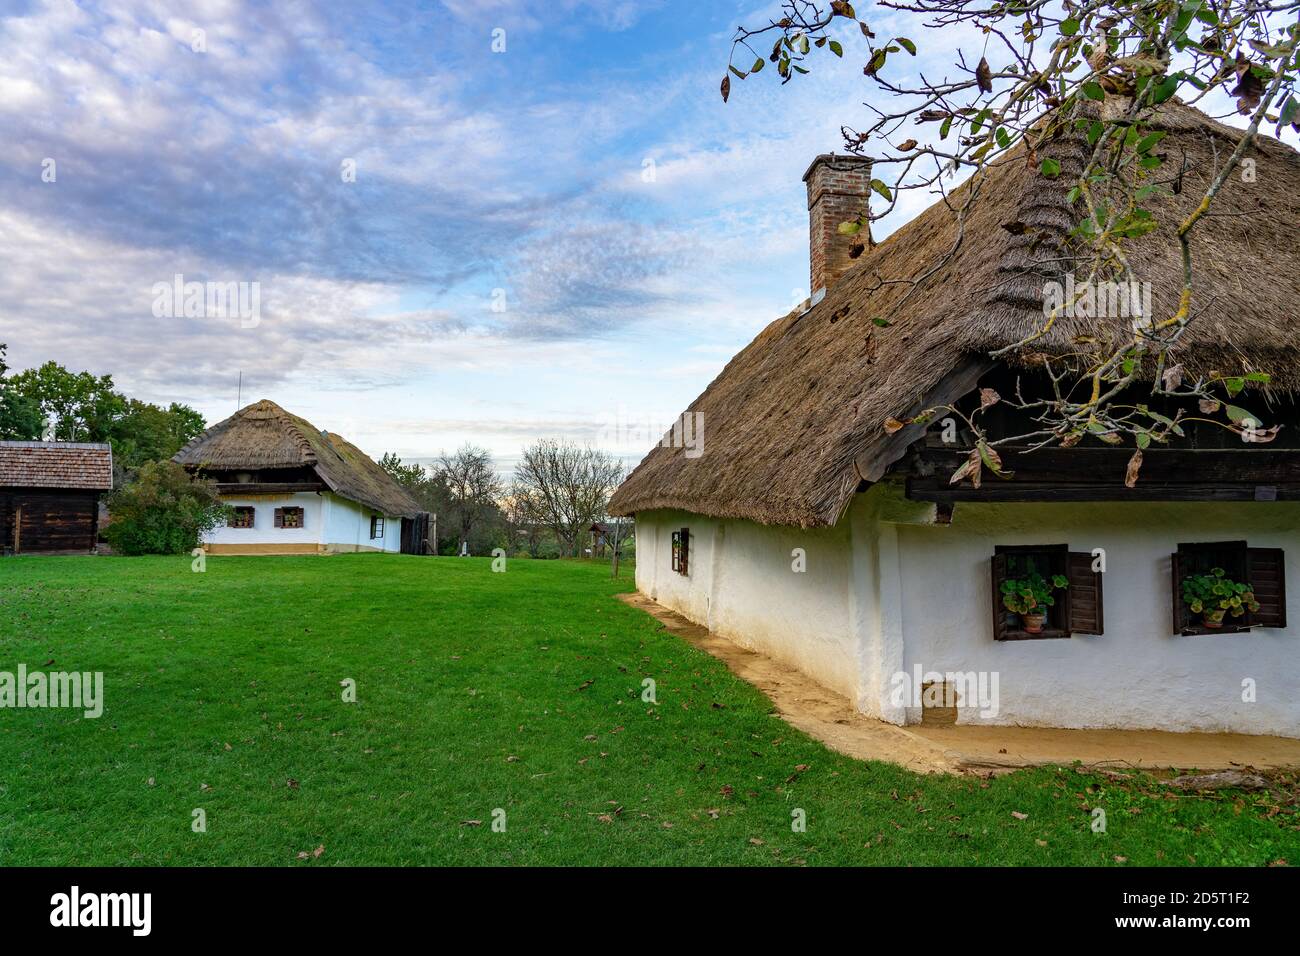 Pityerszer landscape old traditional village in Őrség Hungary Stock Photo